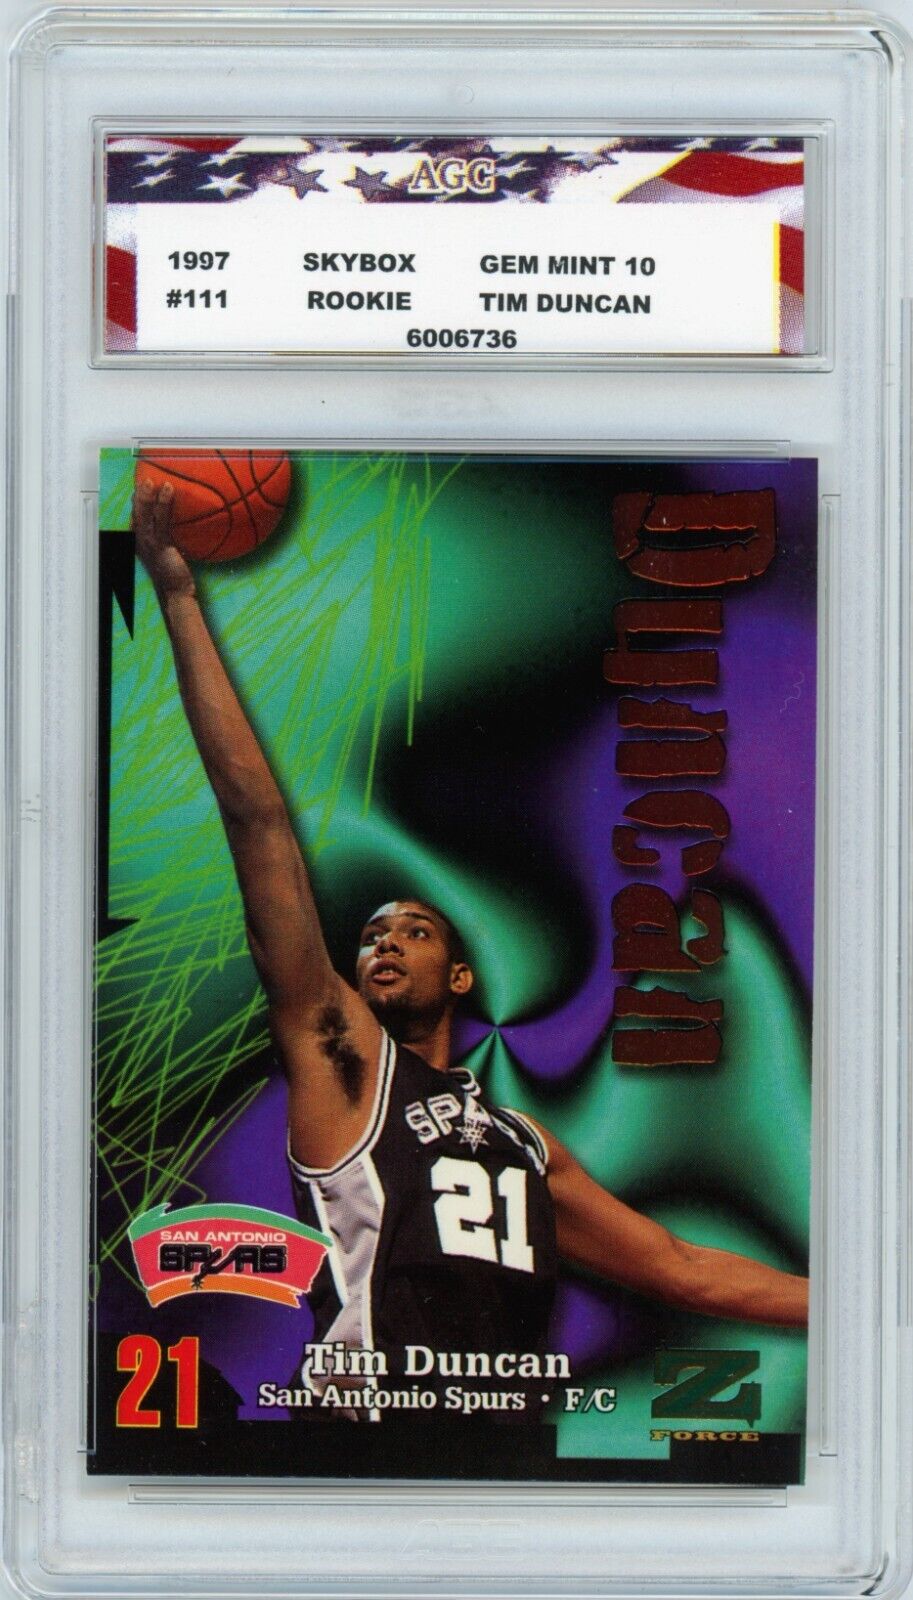 1997 Skybox #111 Tim Duncan Rookie Card AGC 10 Gem Mint San Antonio Spurs. rookie card picture